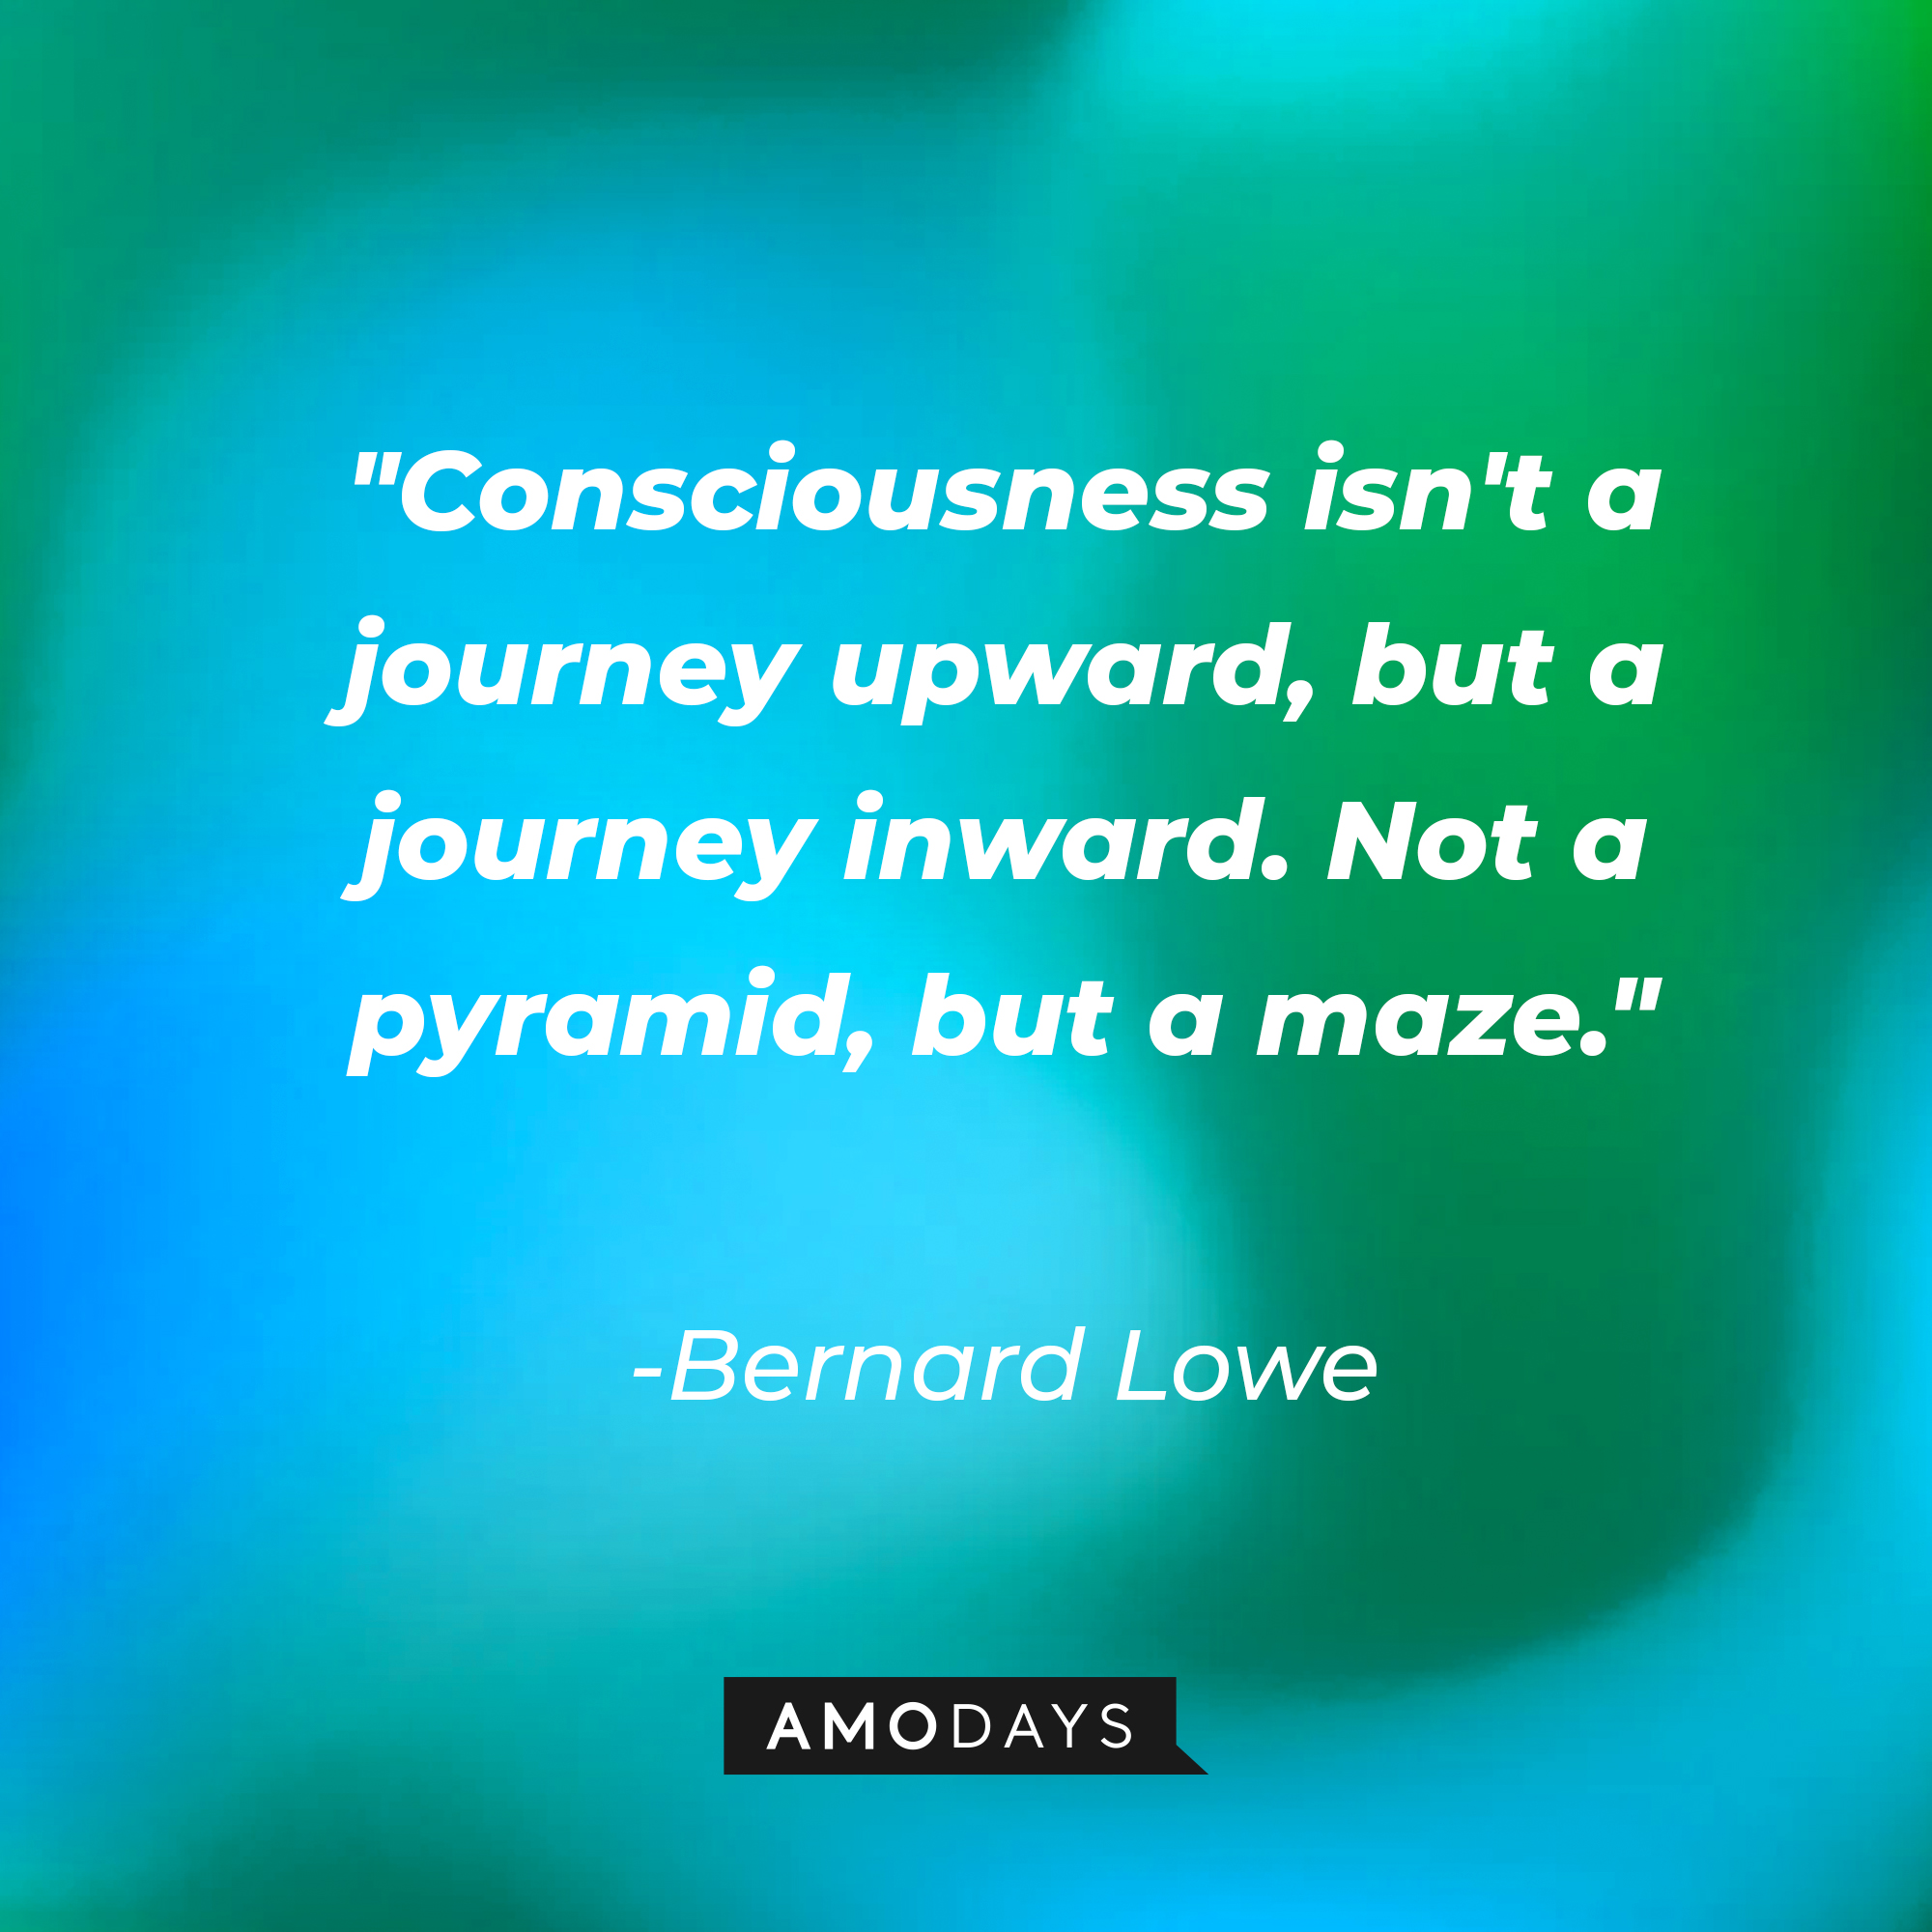 Bernard Lowe's quote: "Consciousness isn't a journey upward, but a journey inward. Not a pyramid, but a maze." | Source: AmoDays